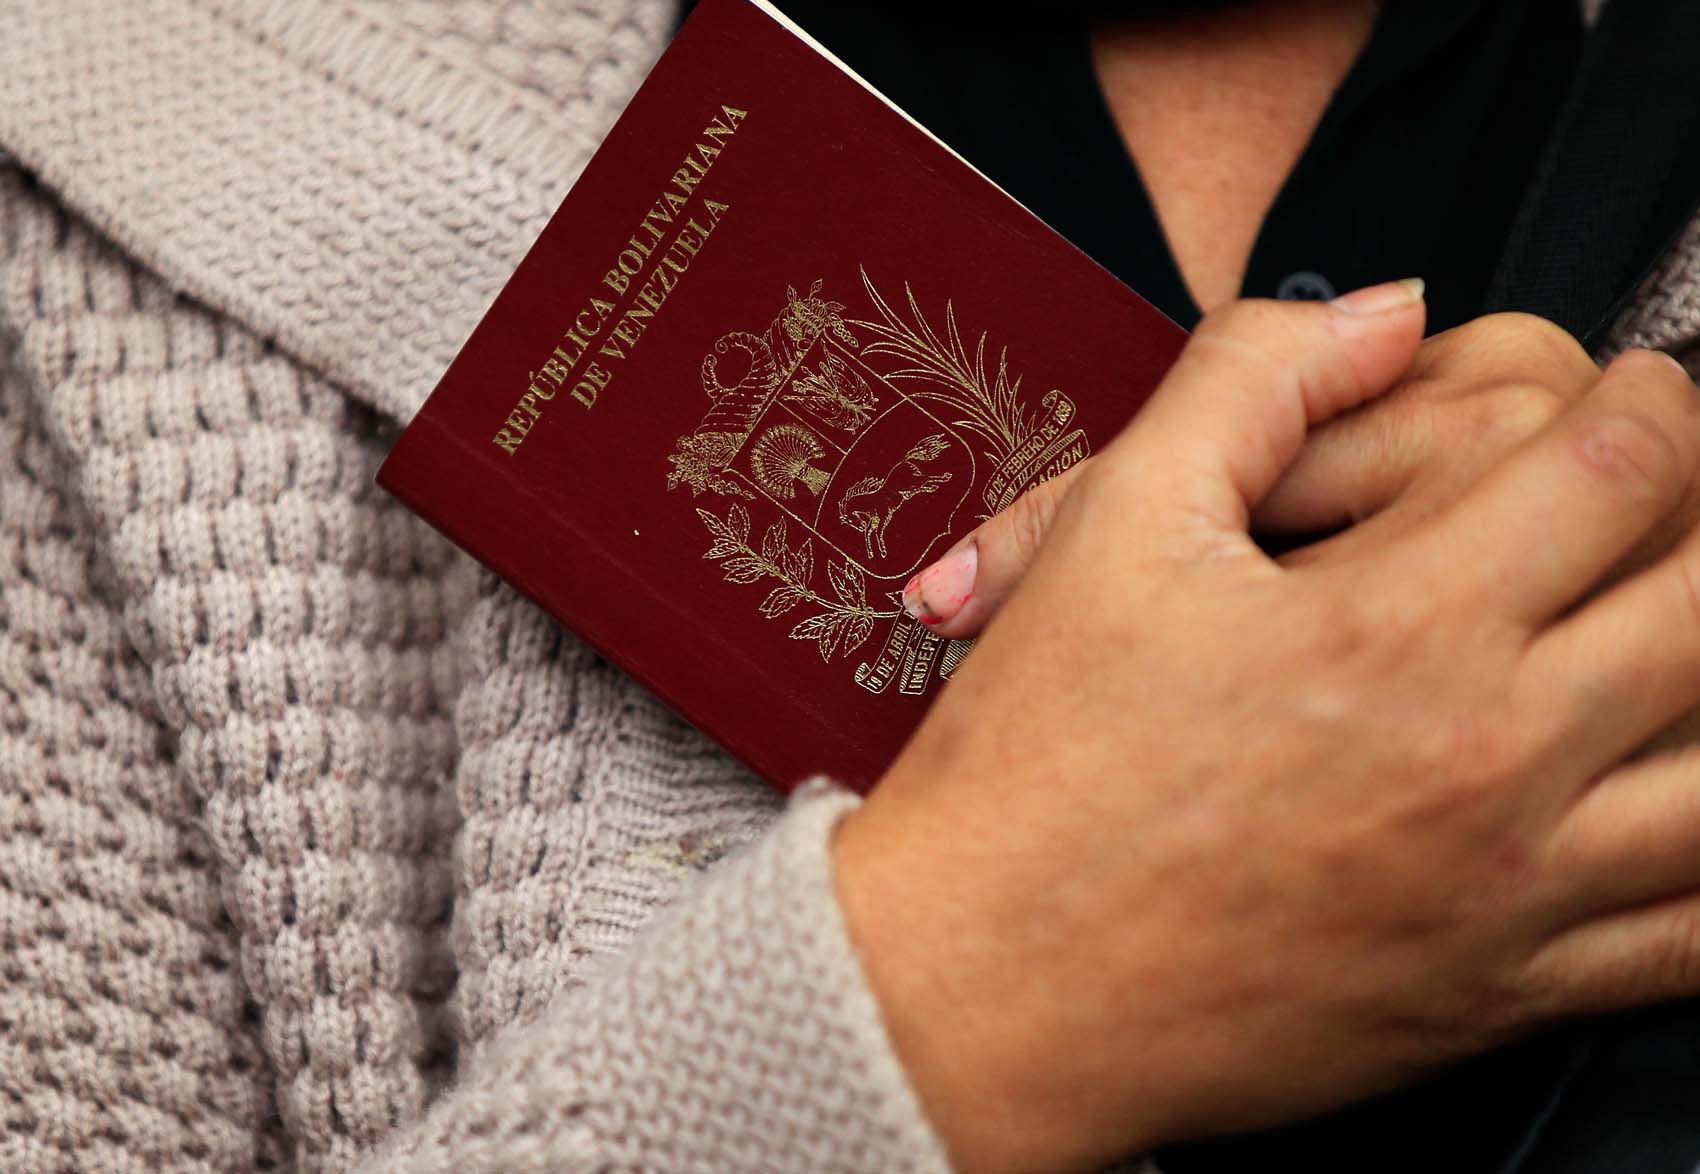 República Dominicana solicitará visa de turismo a migrantes venezolanos (Documento)